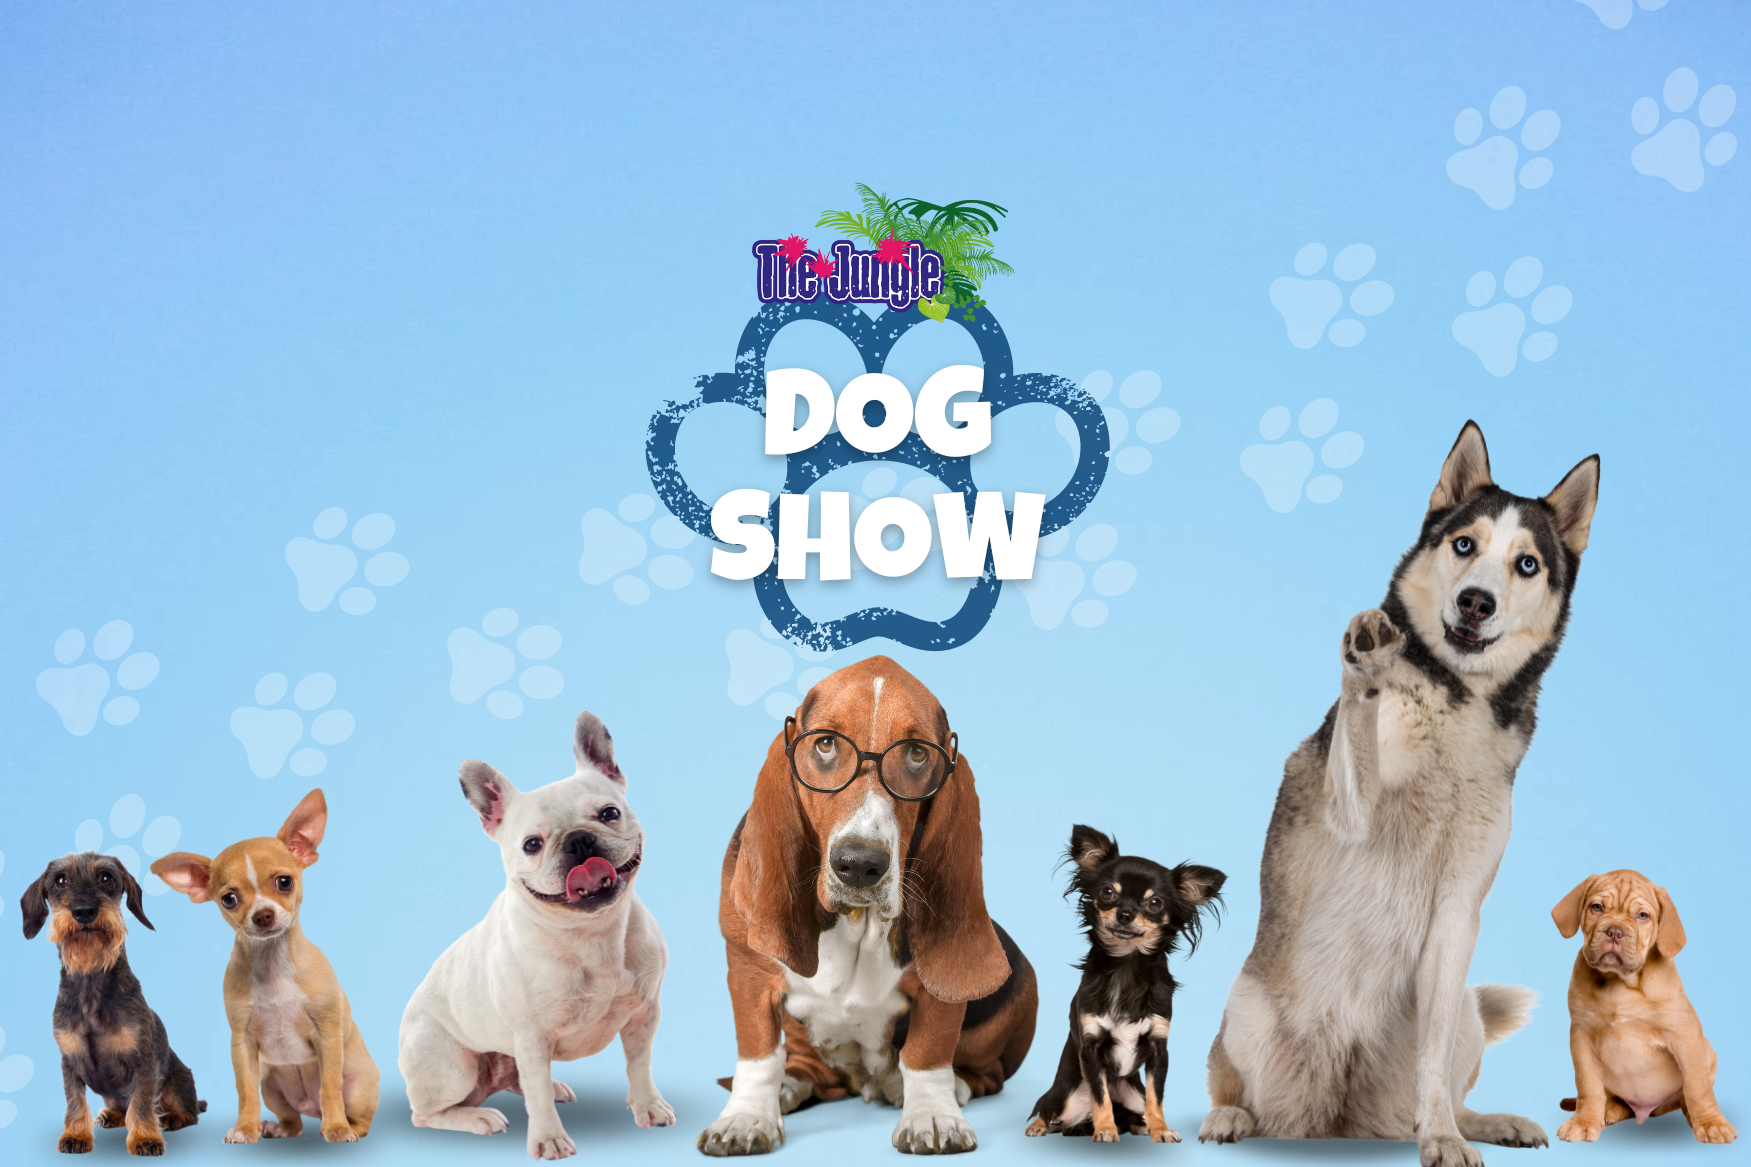 Dog Show webpage header background